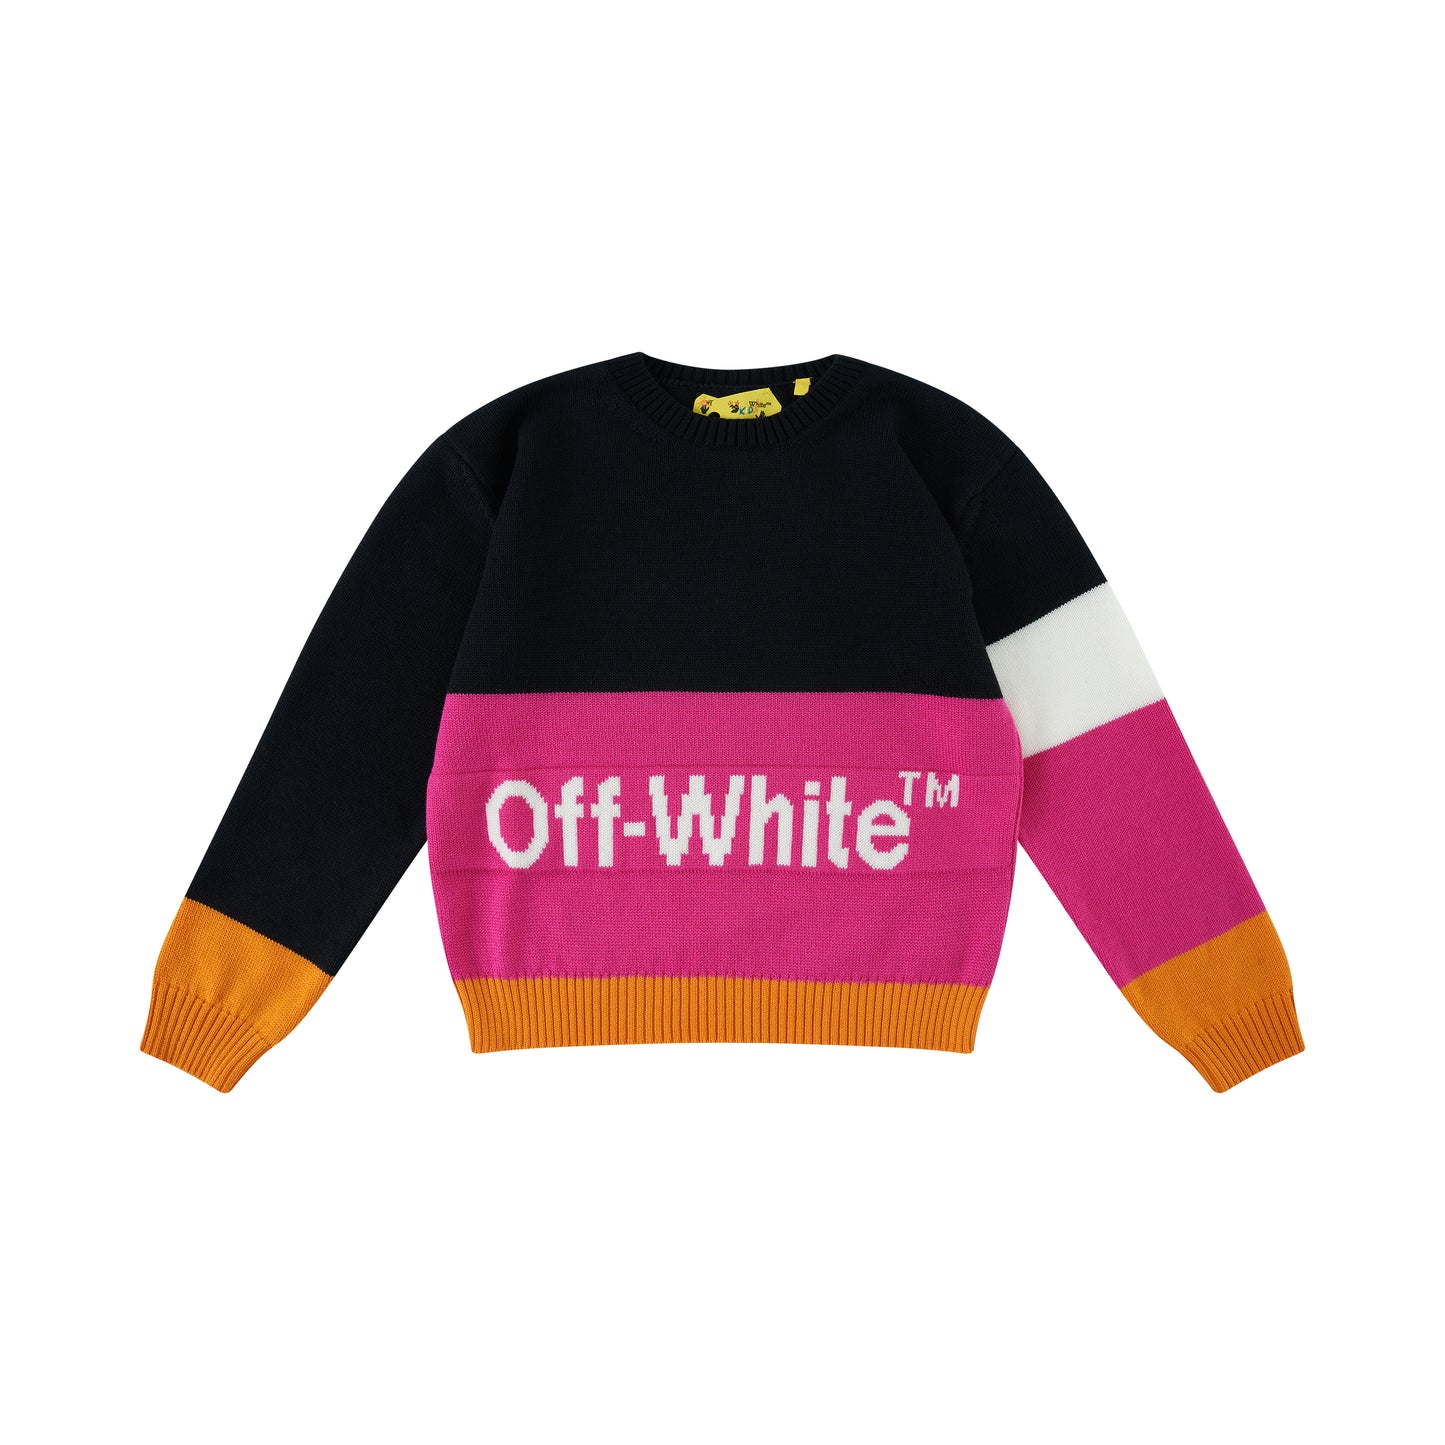 Colour Block Knit Crewneck in Black/White